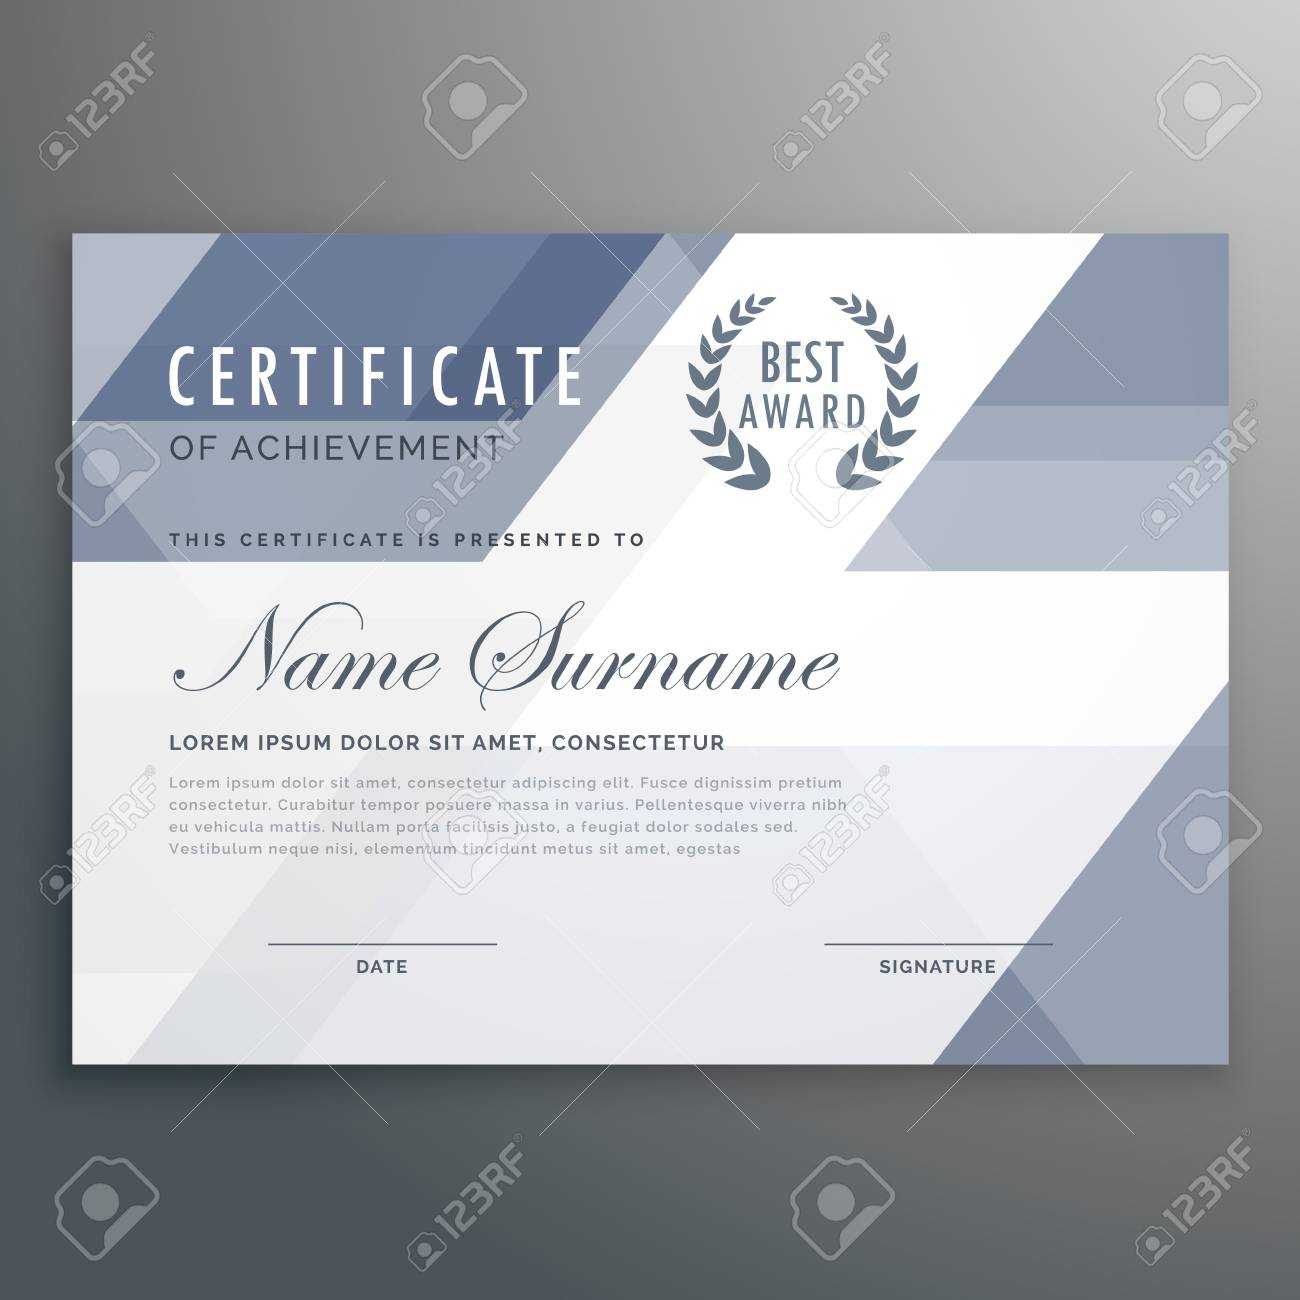 Geometric Certificate Award Template Vector Design For Award Certificate Design Template